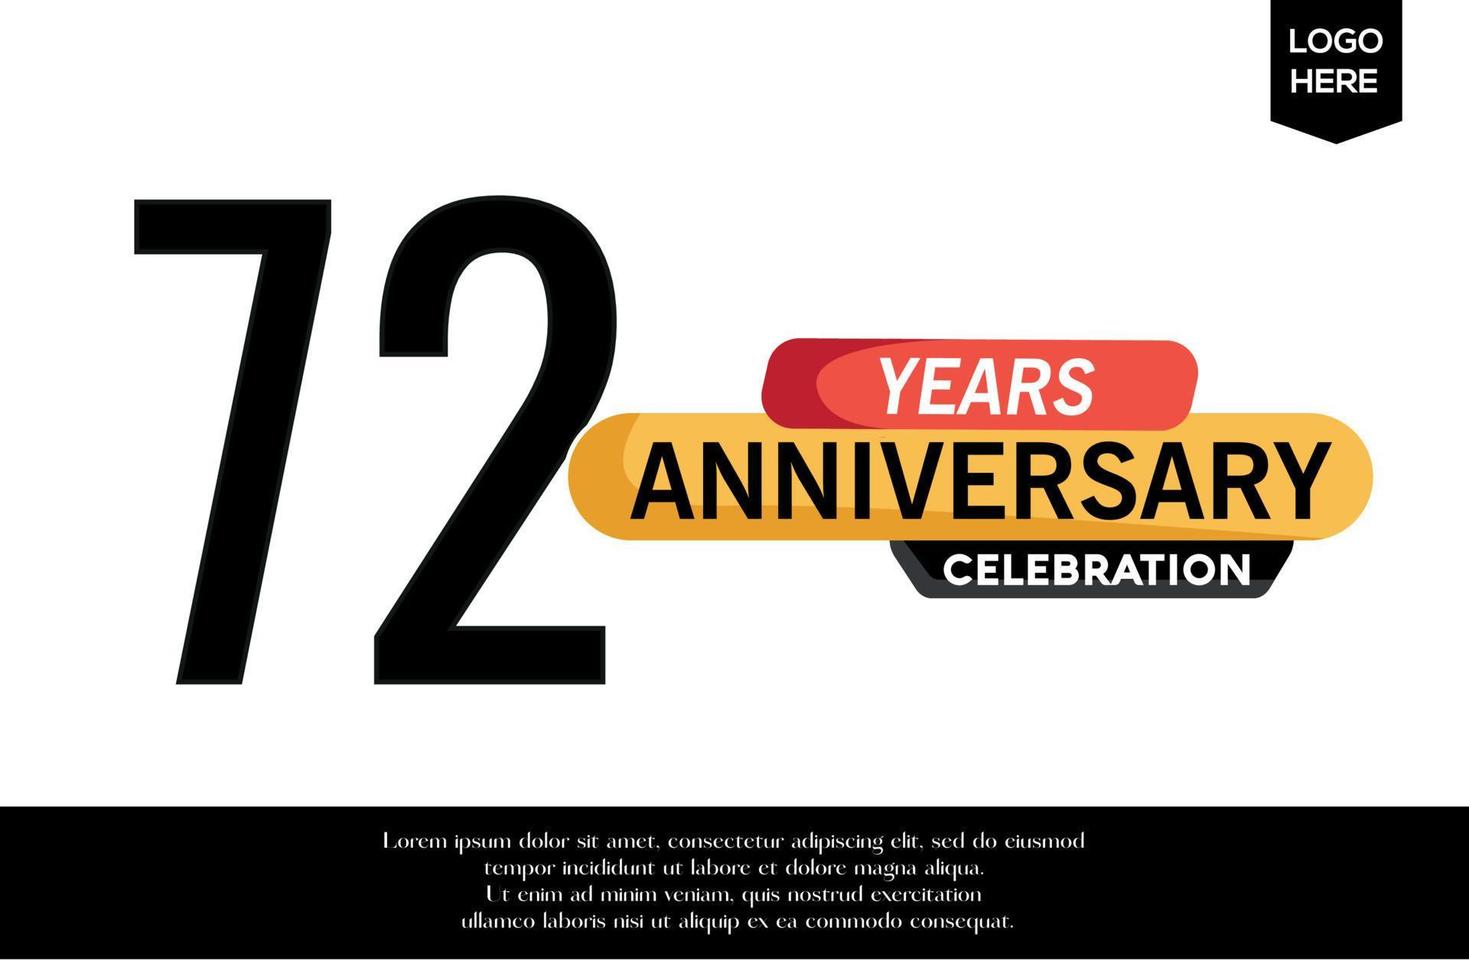 72 aniversario celebracion logotipo negro amarillo de colores con texto en gris color aislado en blanco antecedentes vector modelo diseño